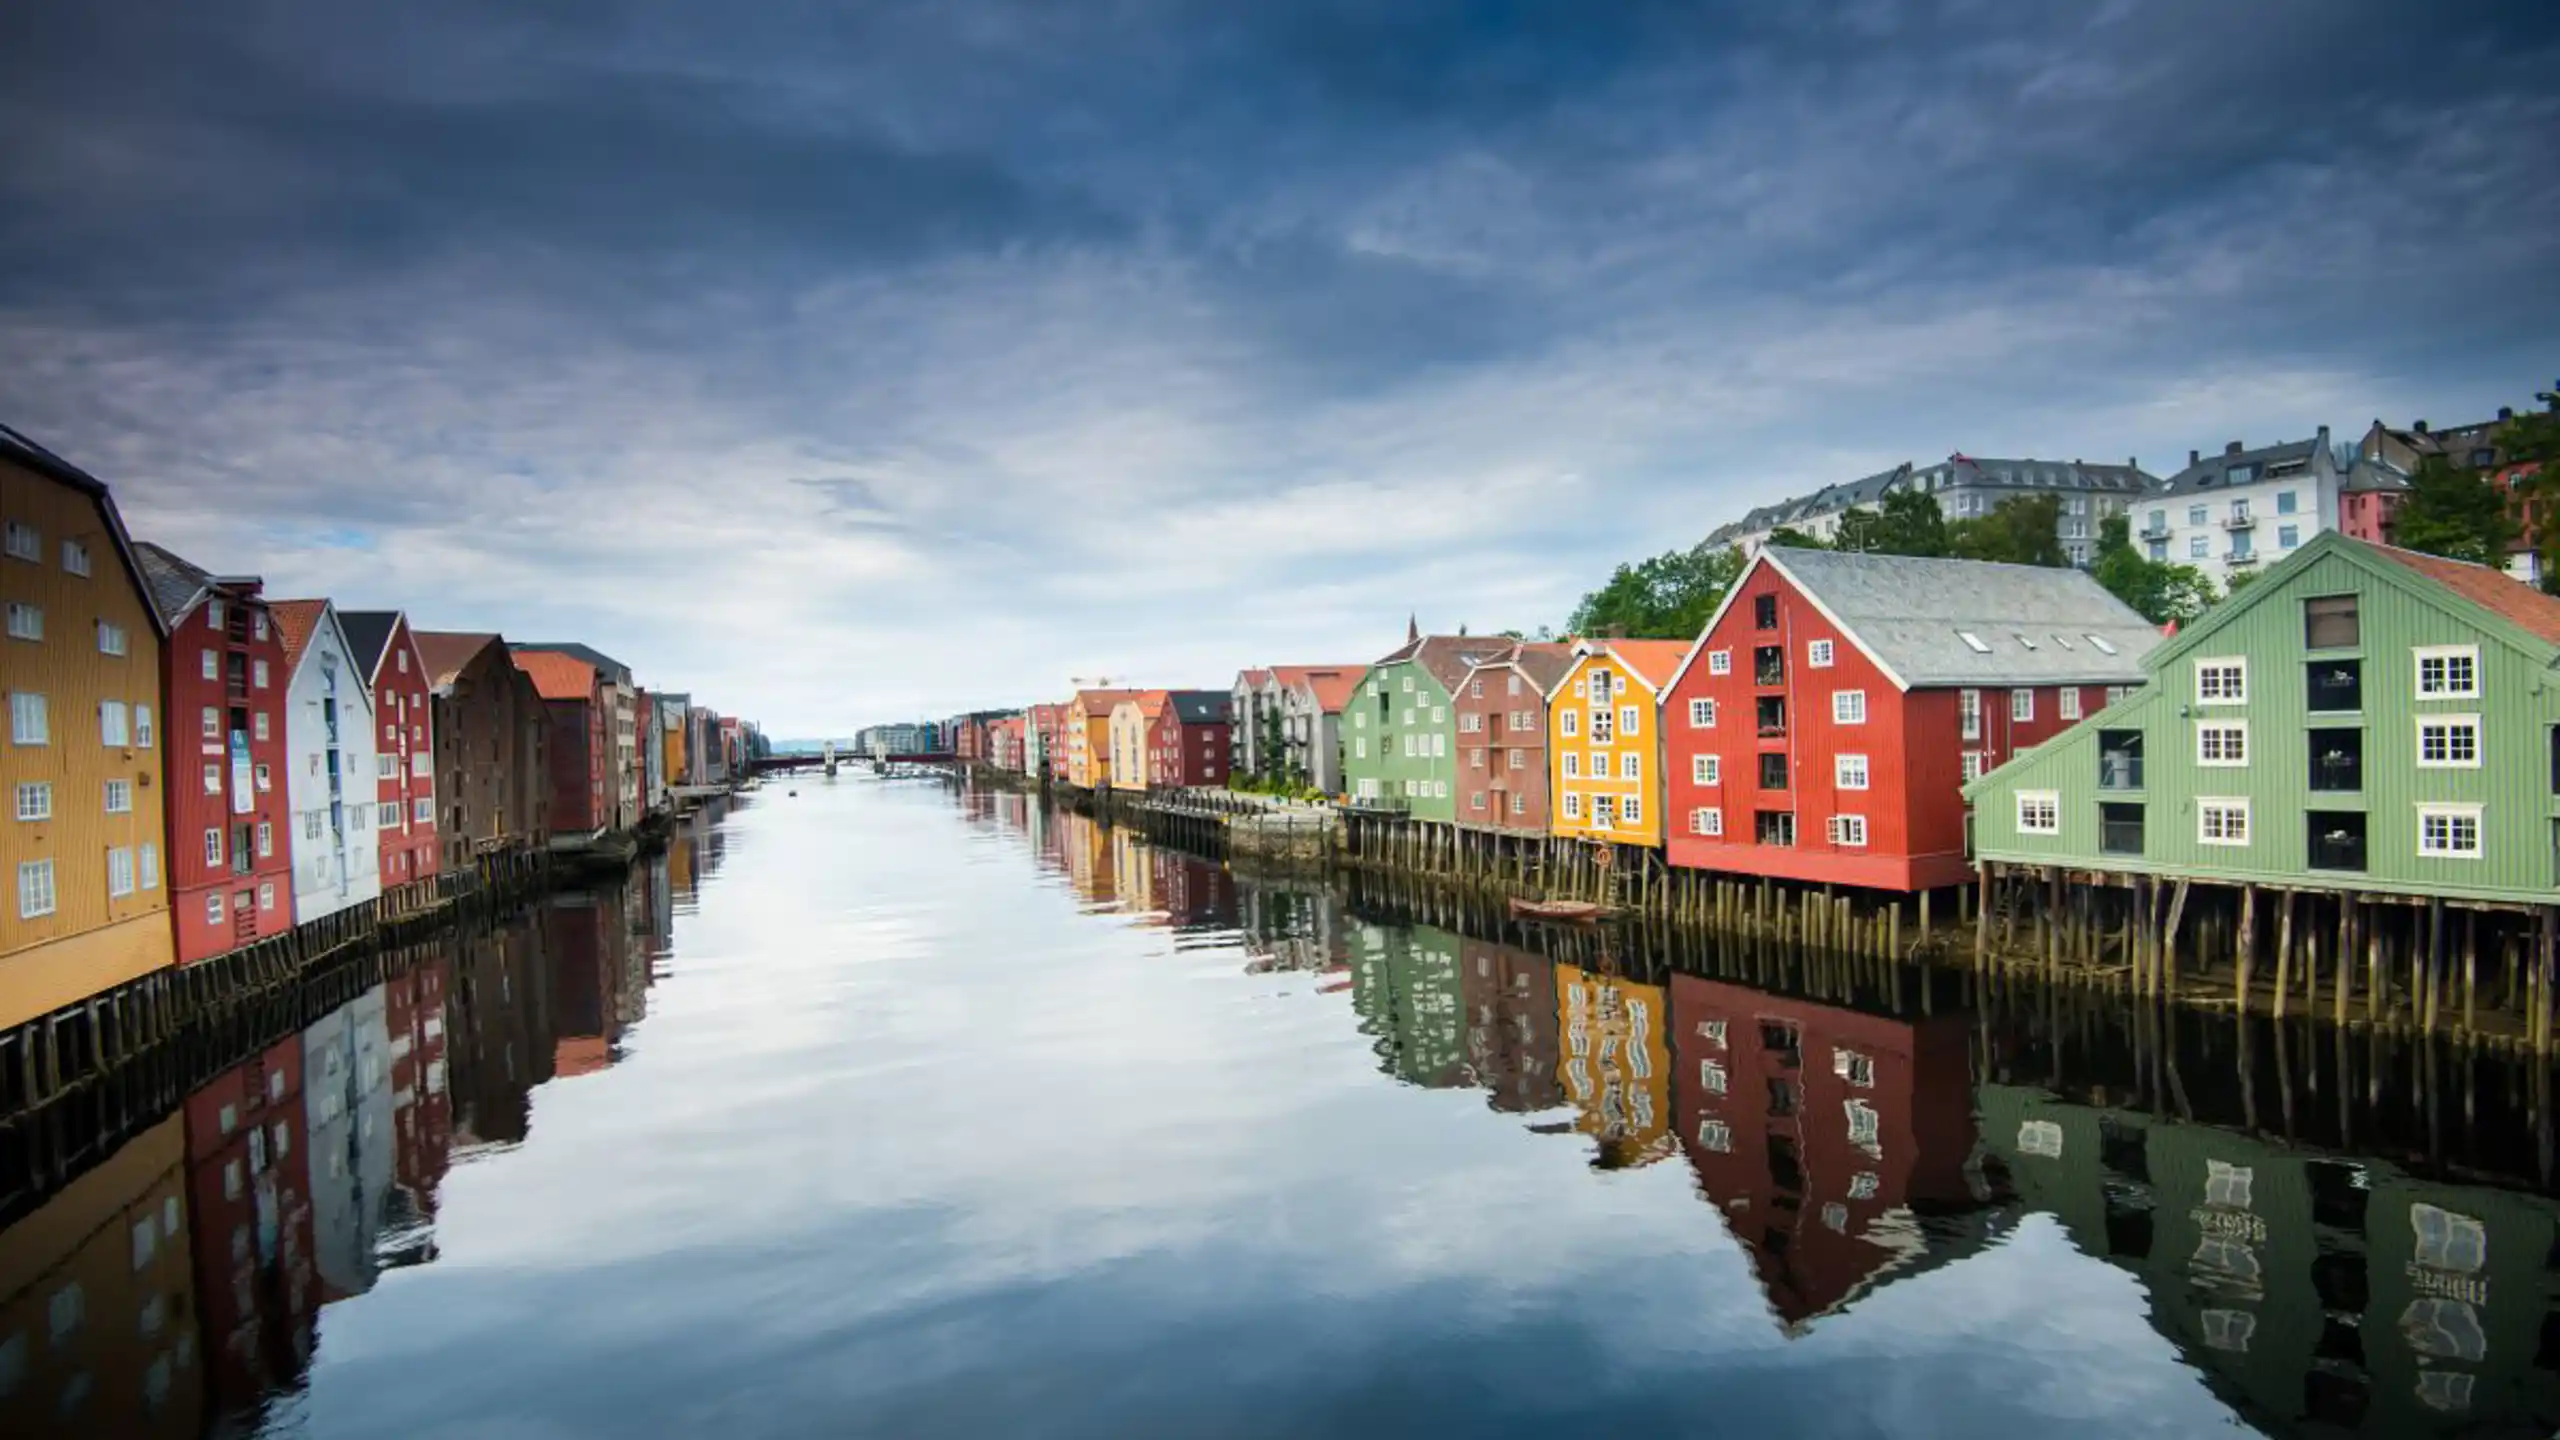 Trondheim City In Norway 2023 11 27 05 17 21 Utc